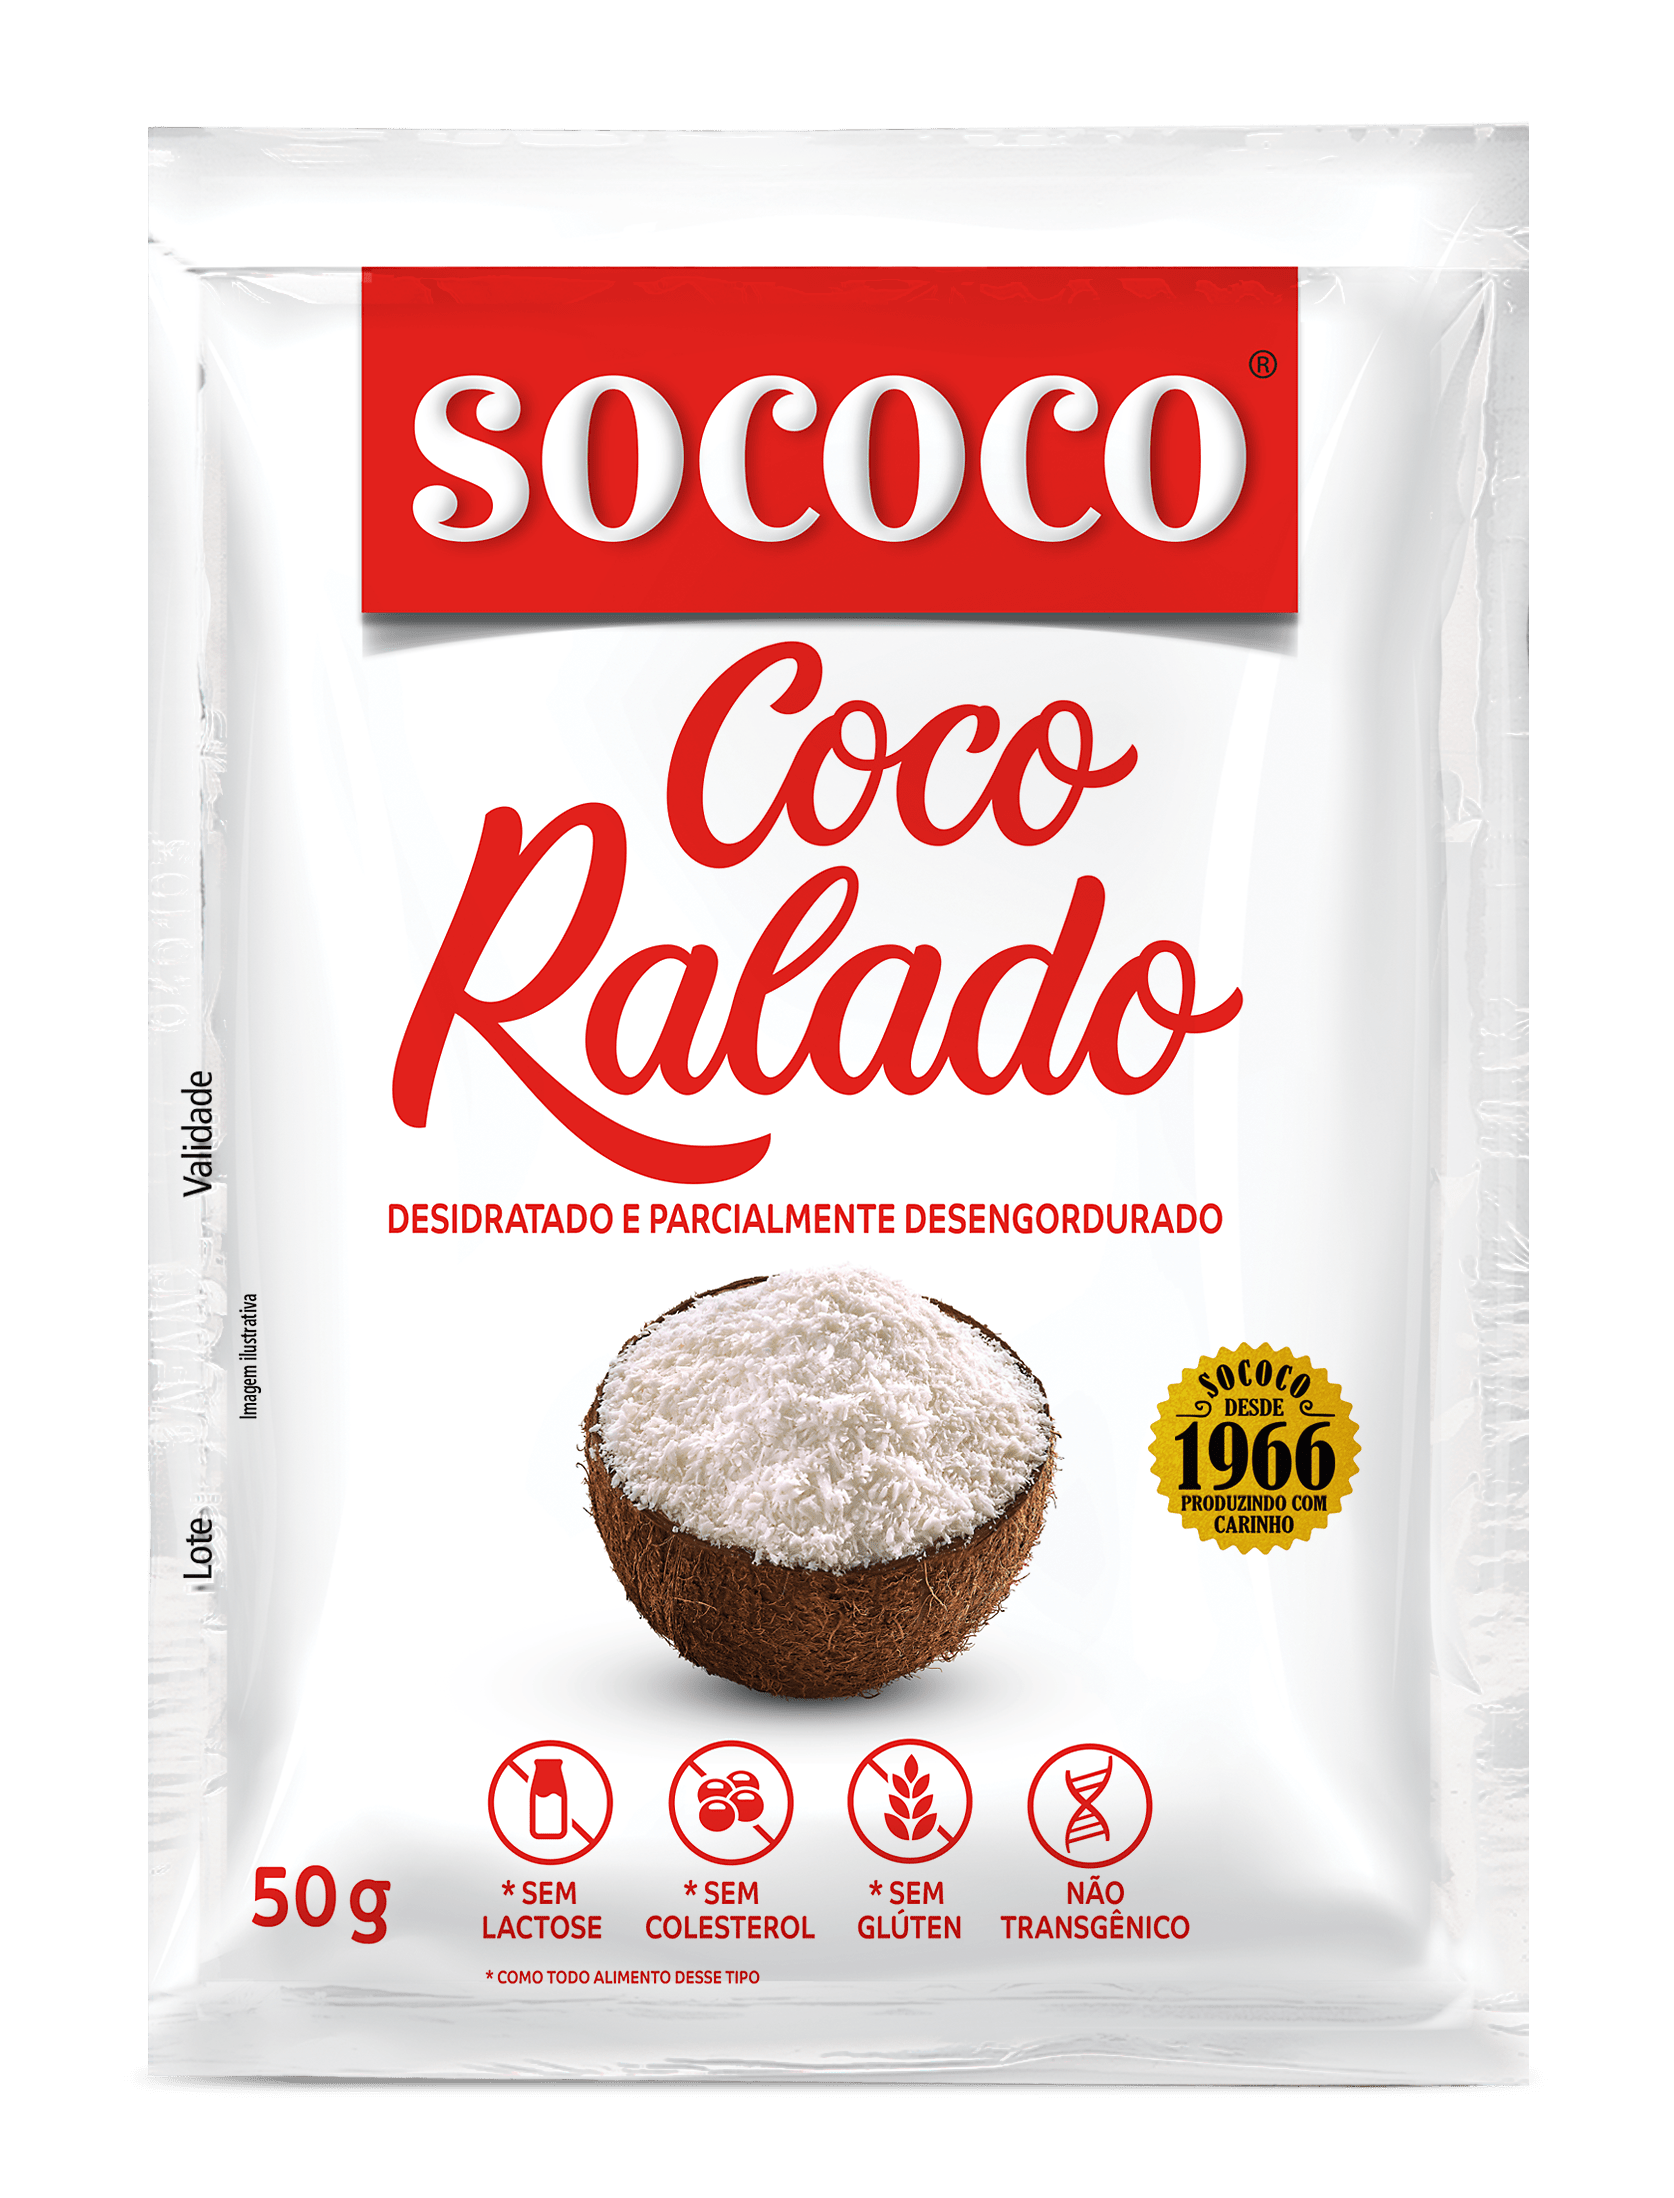 SOCOCO COCO RALADO PURO 50GR